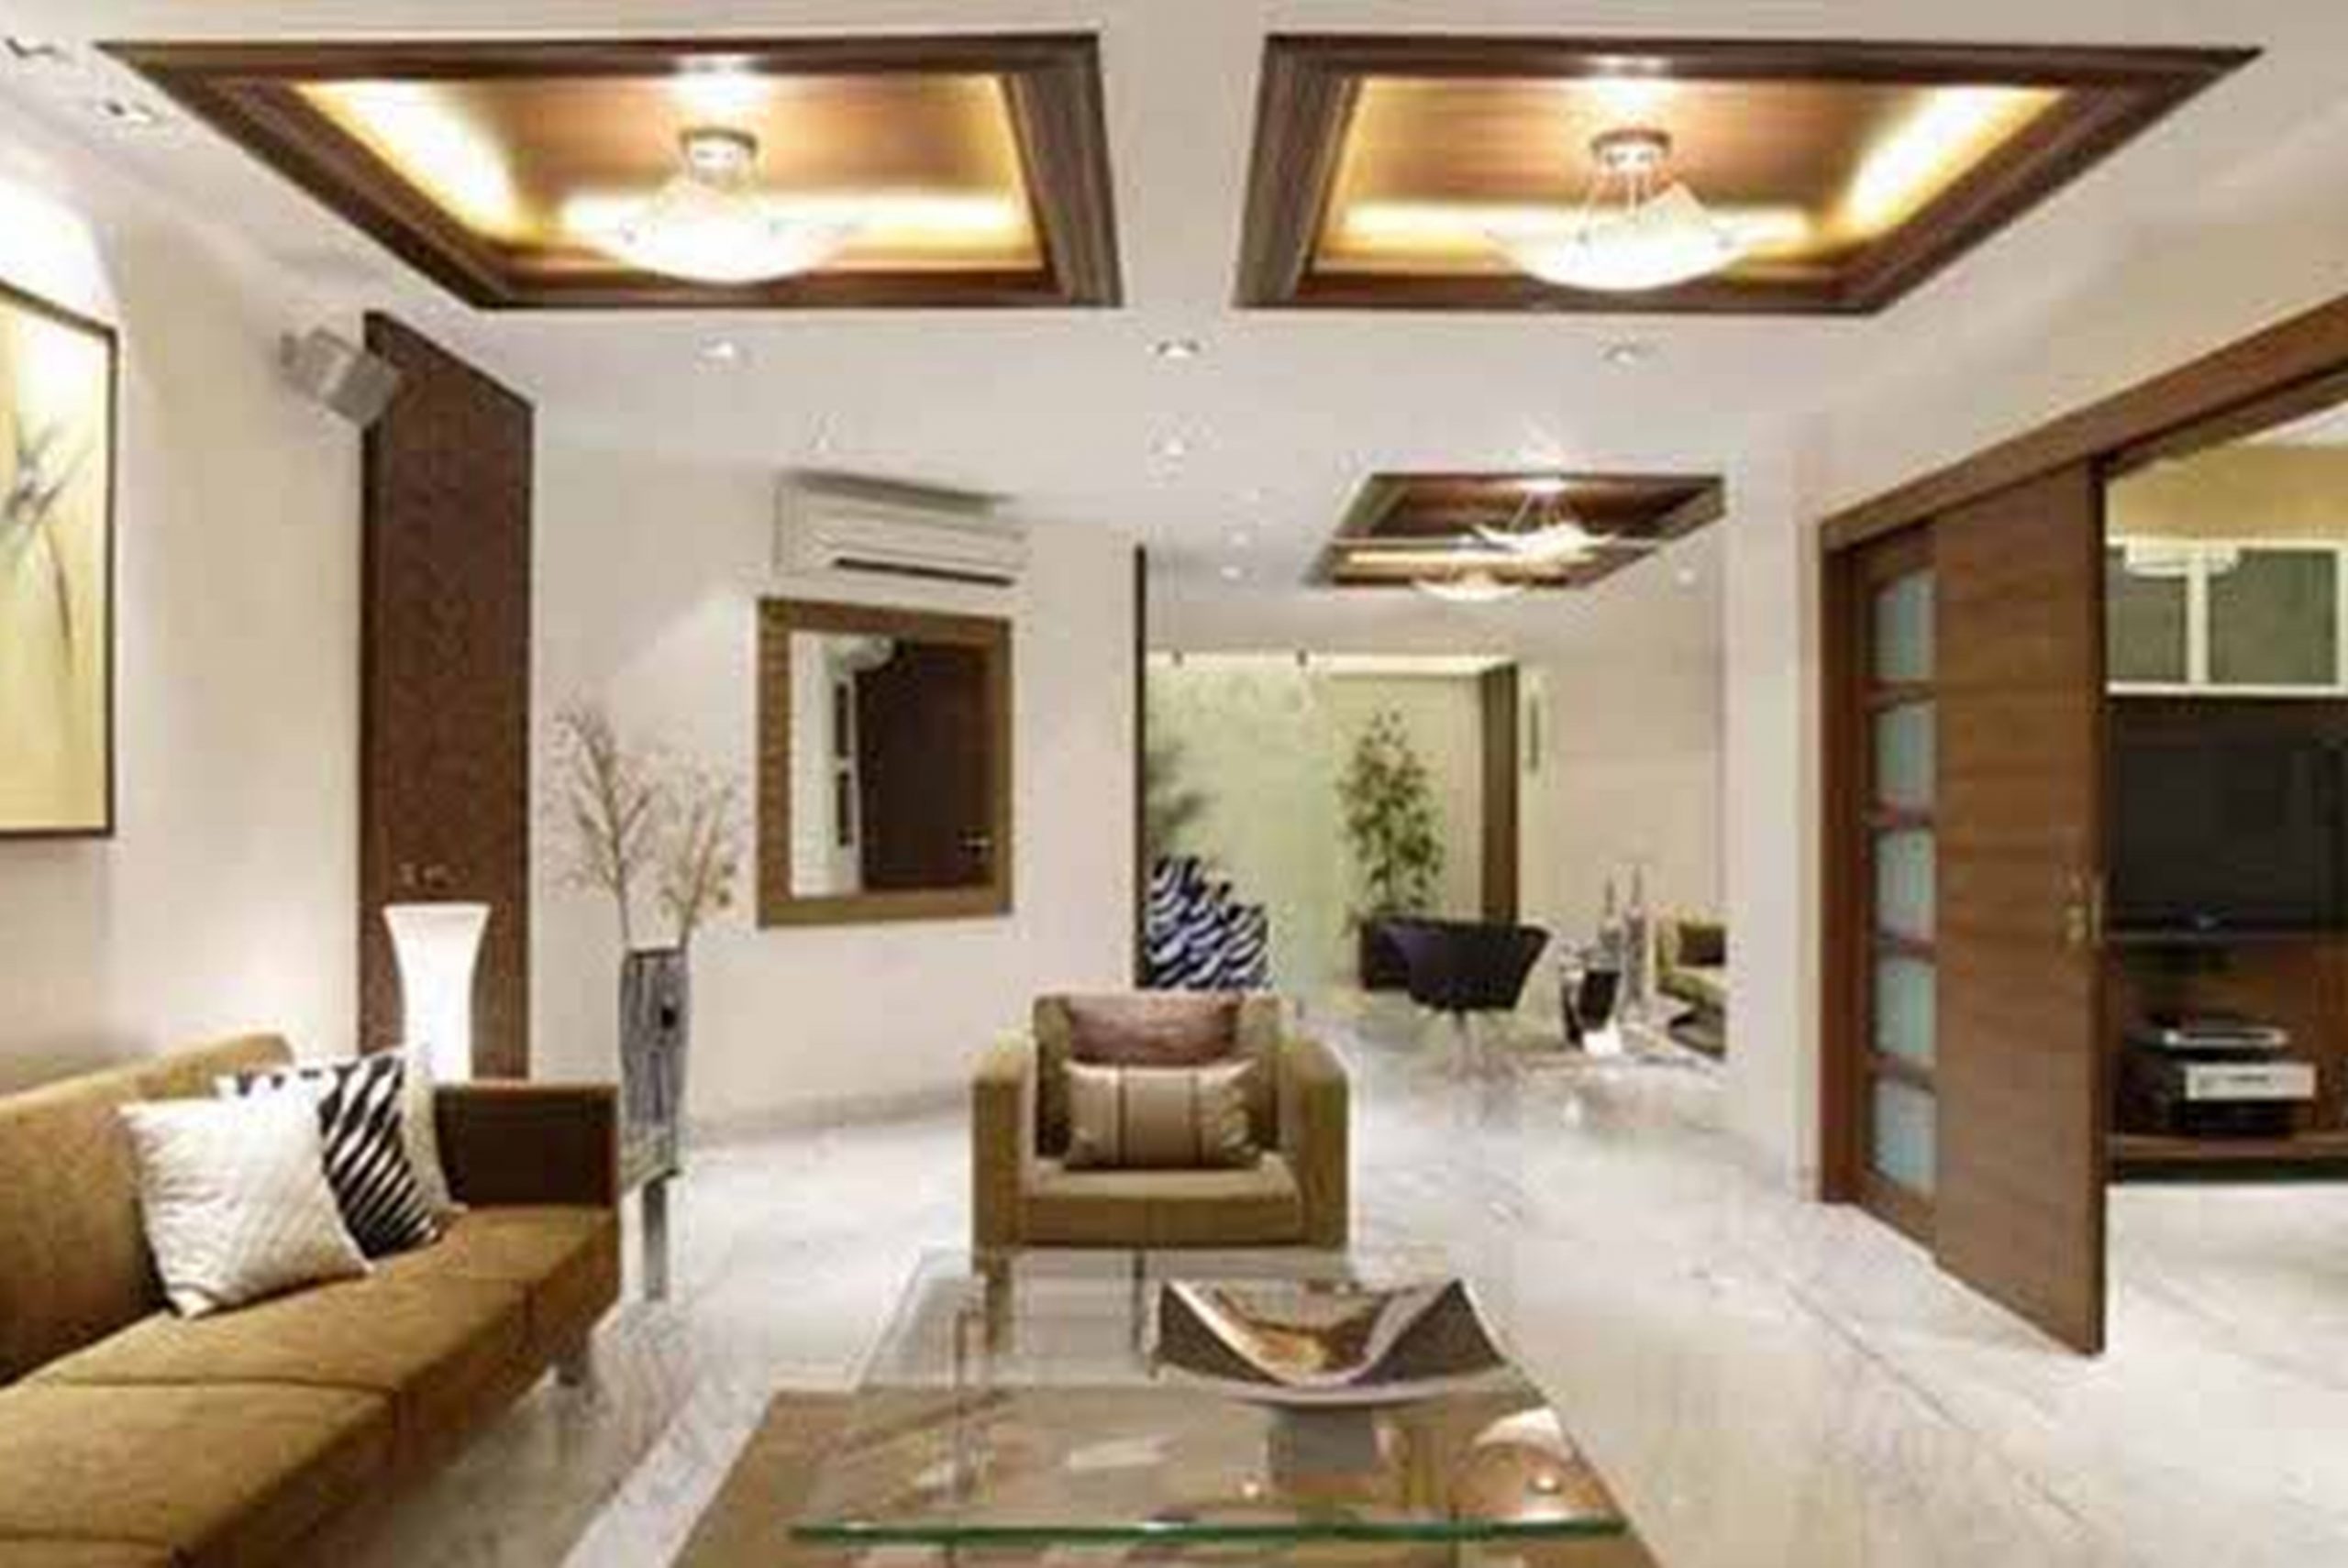 Inexpensive Interior Home Decor Ideas